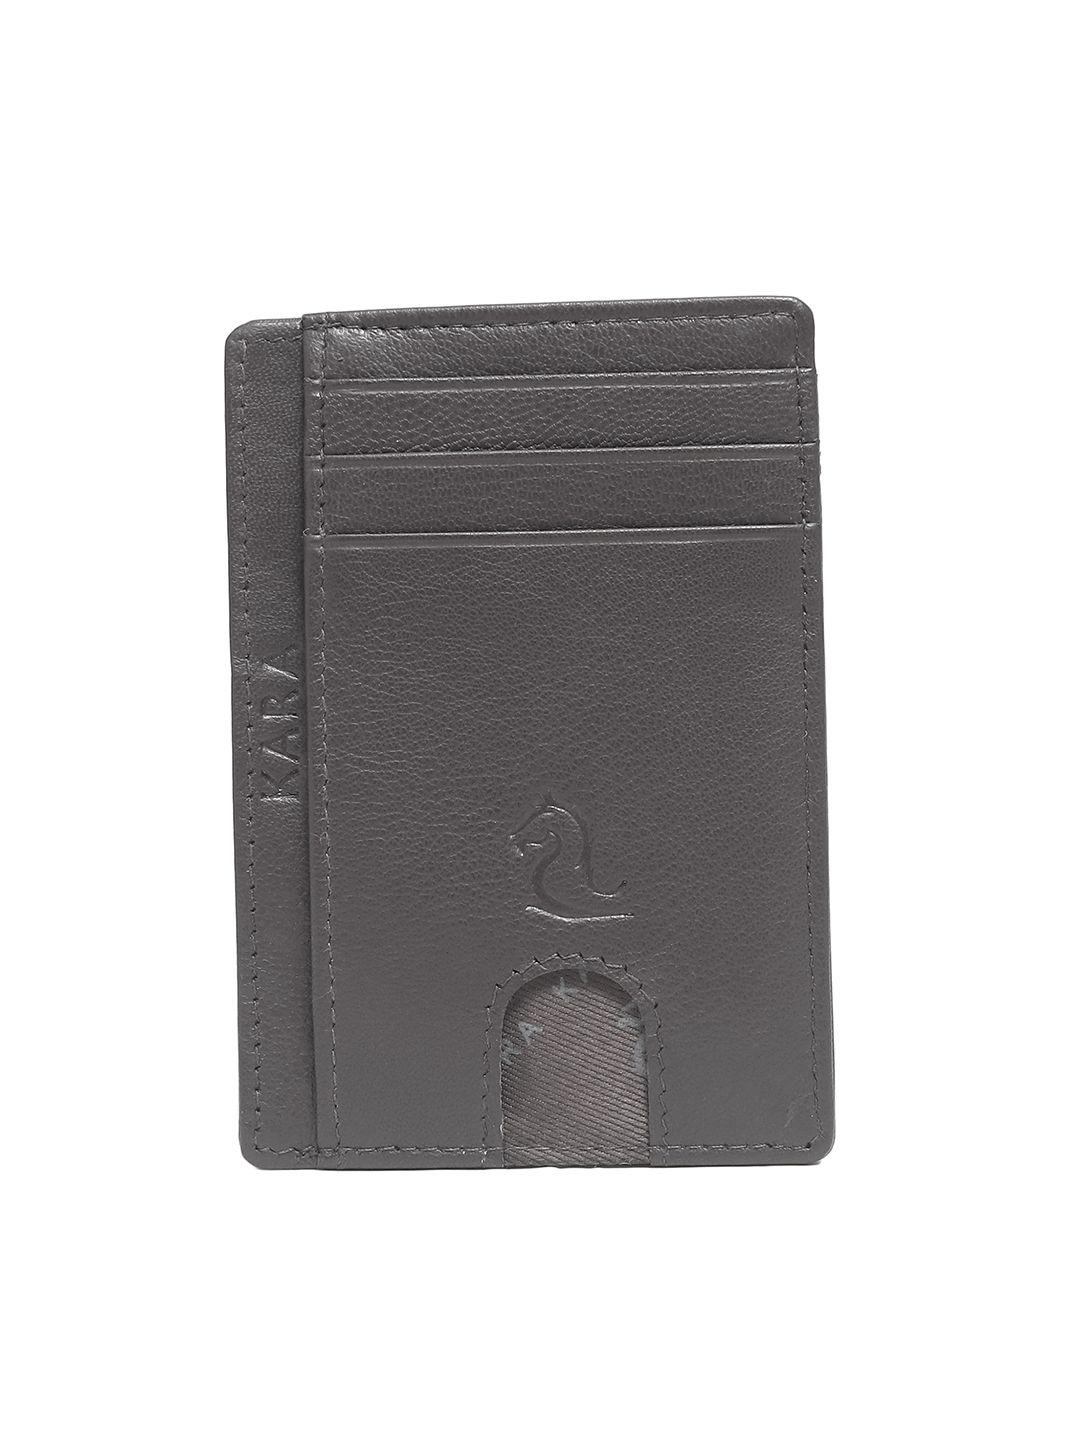 kara unisex textured leather card holder